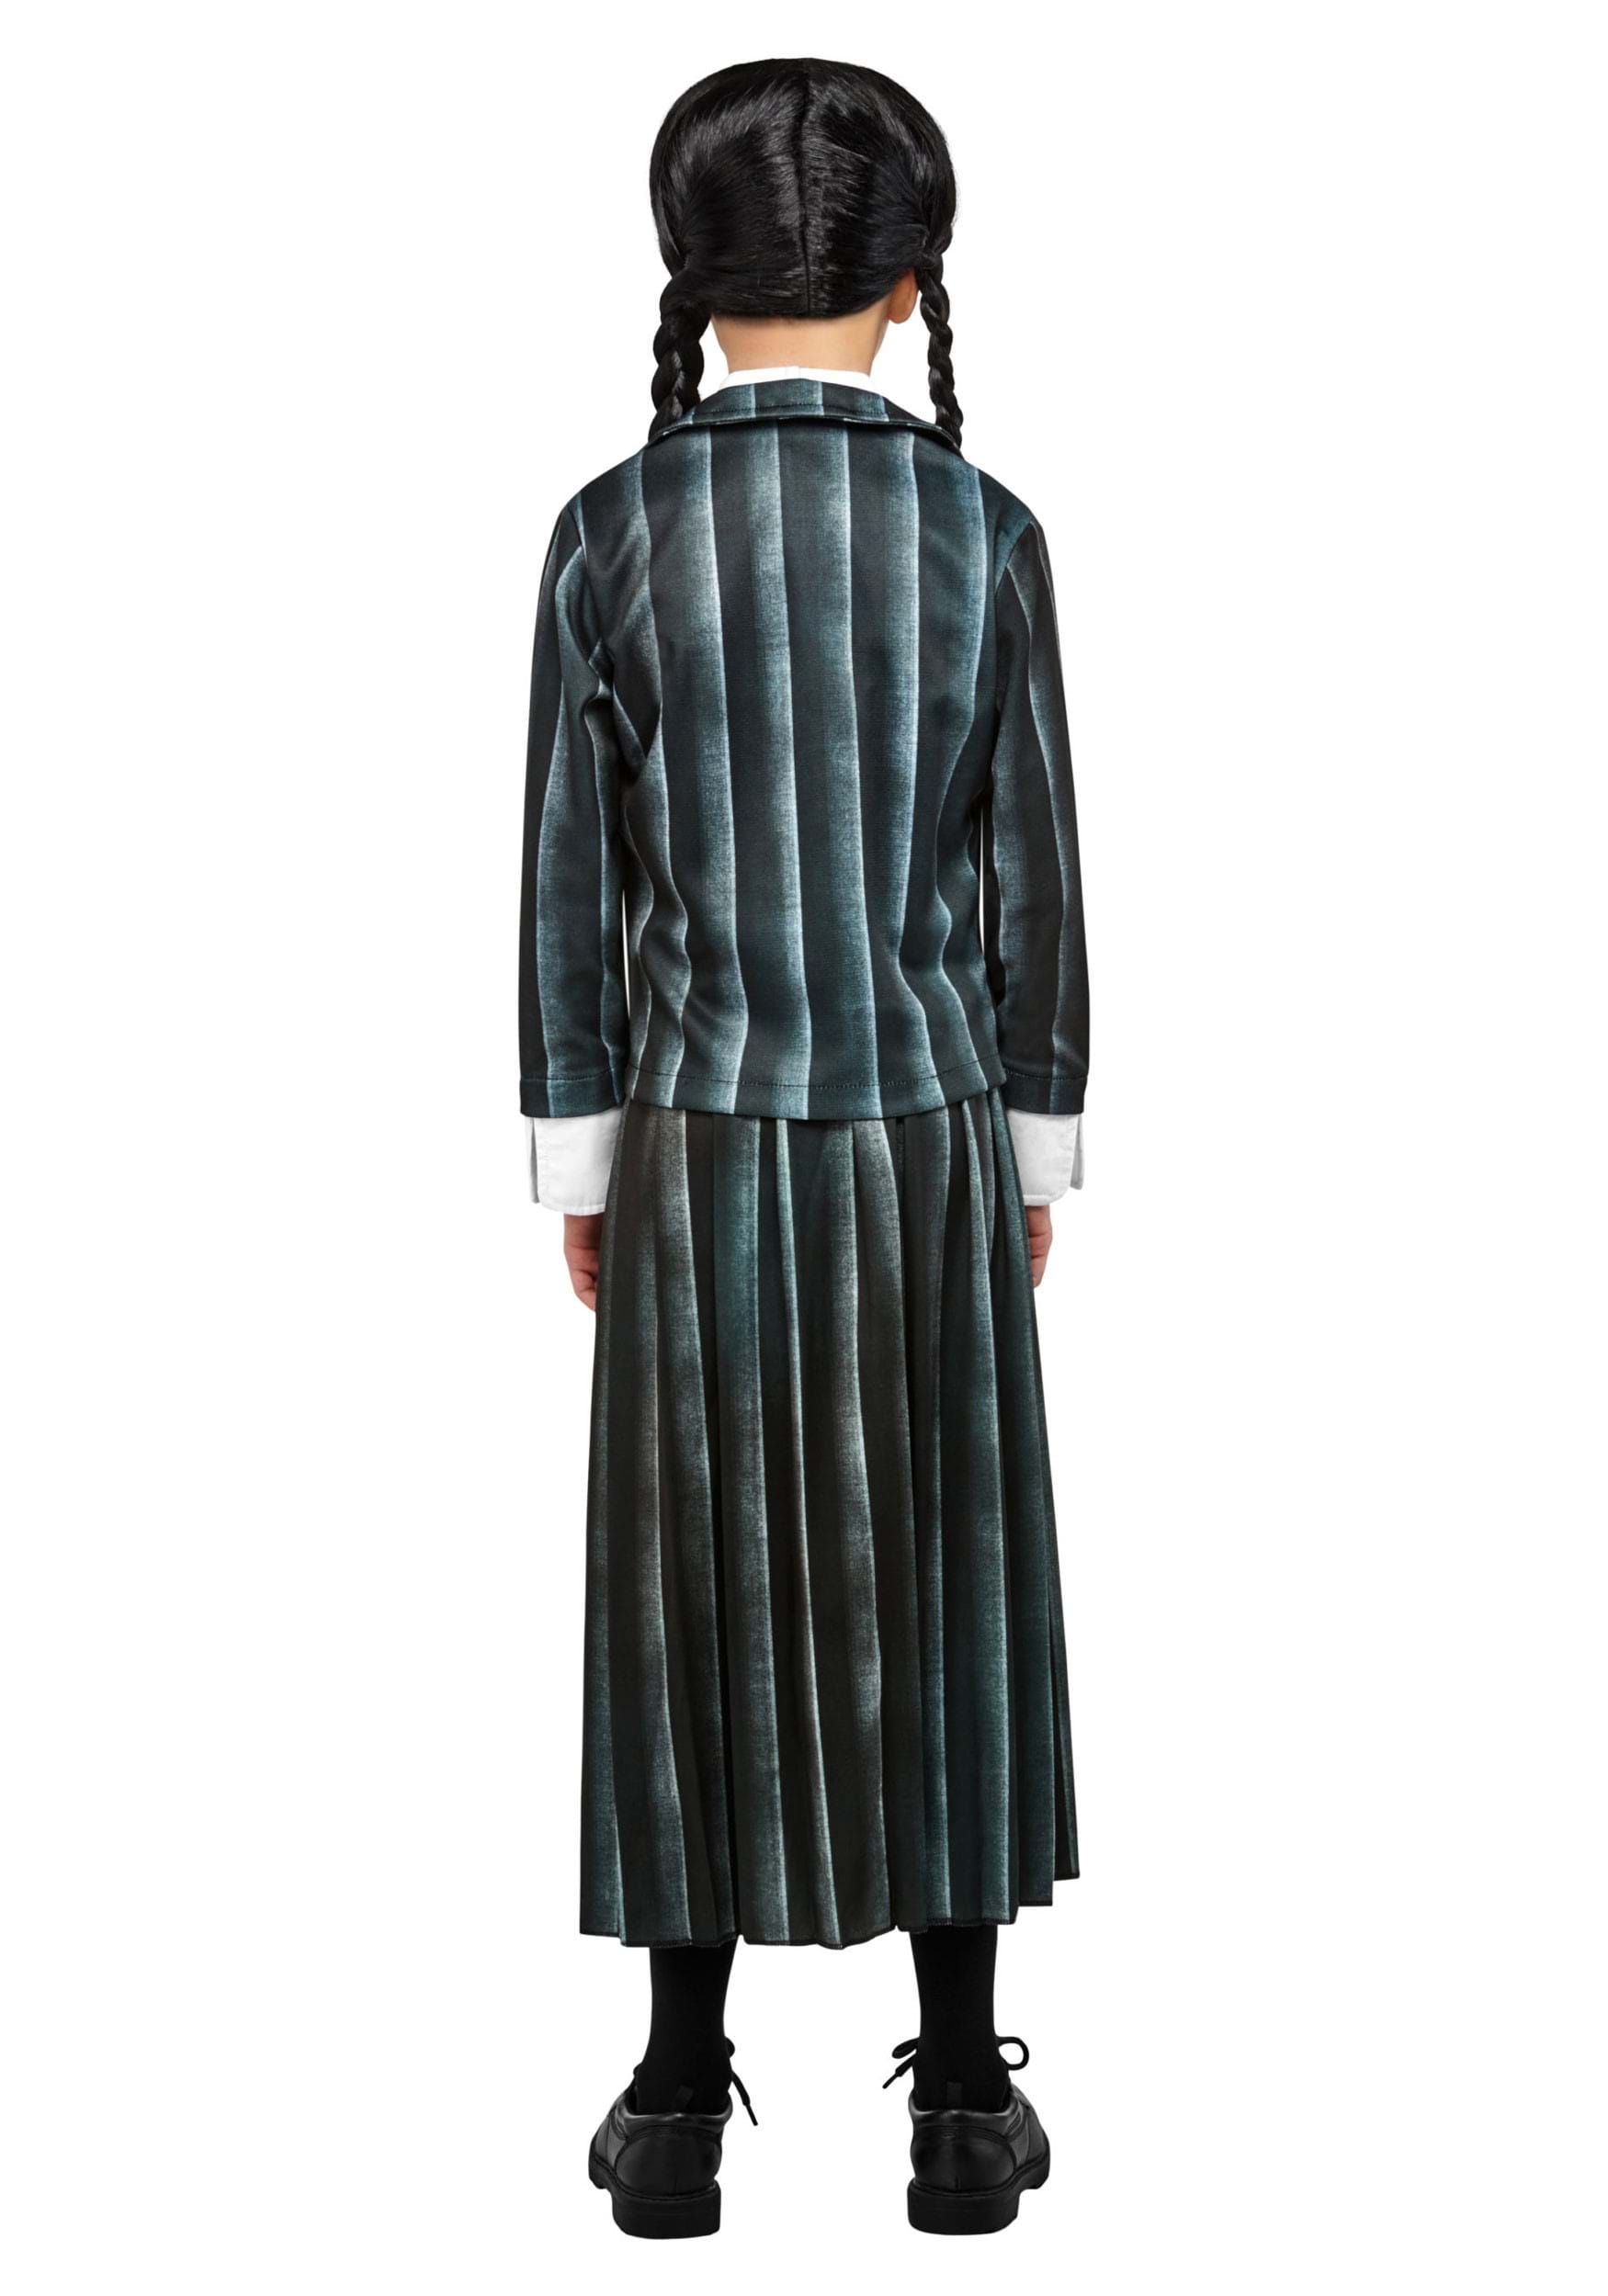 Wednesday Addams Cosplay Costume Dress Addams Family Halloween School  Uniform